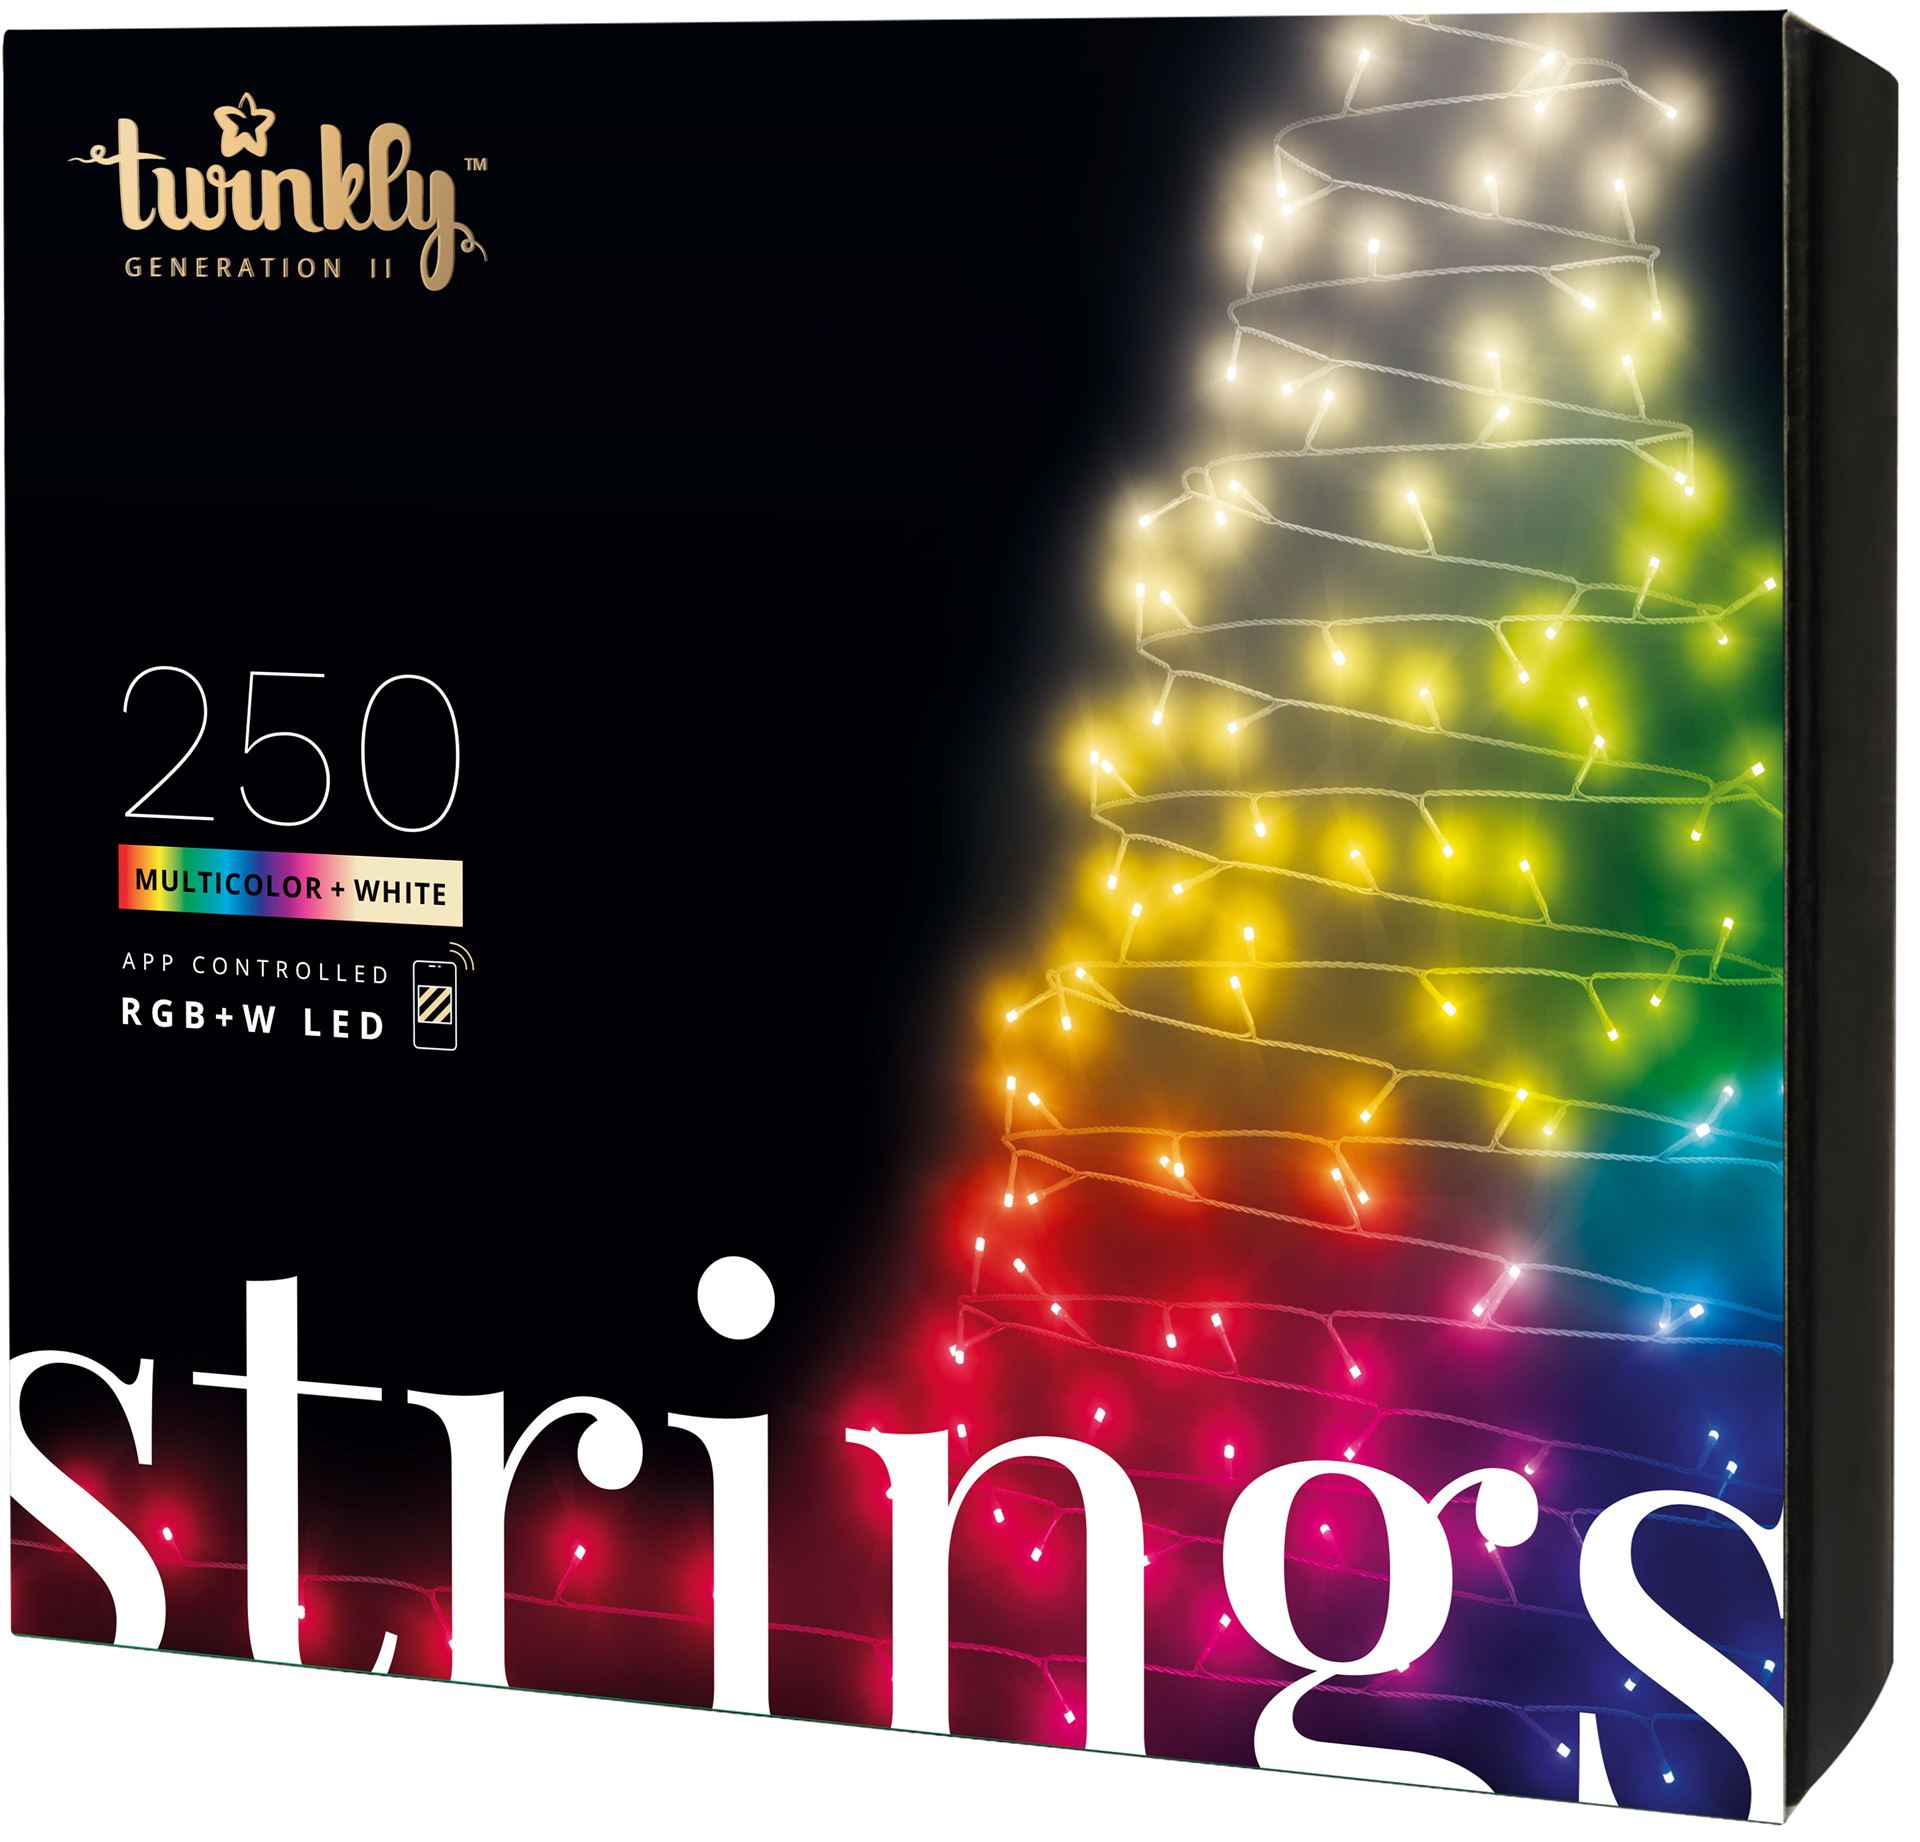 Twinkly - smart kerstboomverlichting "Special Edition" - 20 m - 250 gekleurde & warm witte ledlampjes (RGBW) - met mobiele app, timer & dimmer